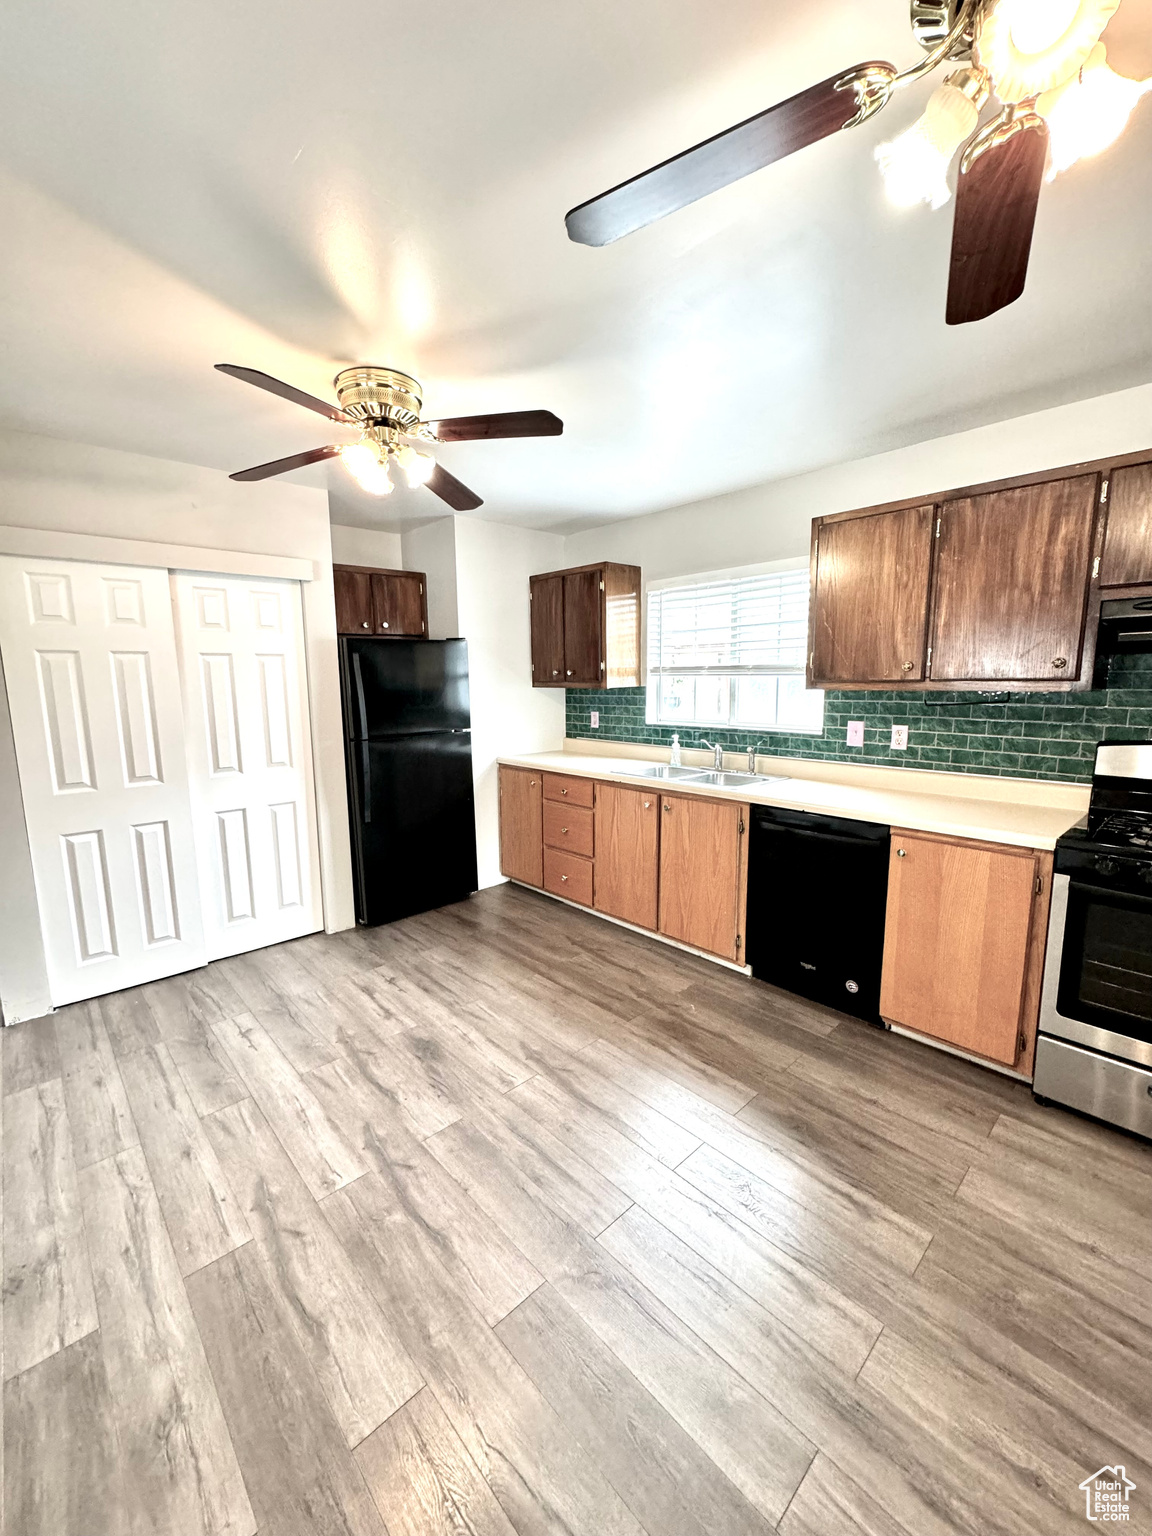 Kitchen with light hardwood / wood-style flooring, black appliances, sink, tasteful backsplash, and ceiling fan